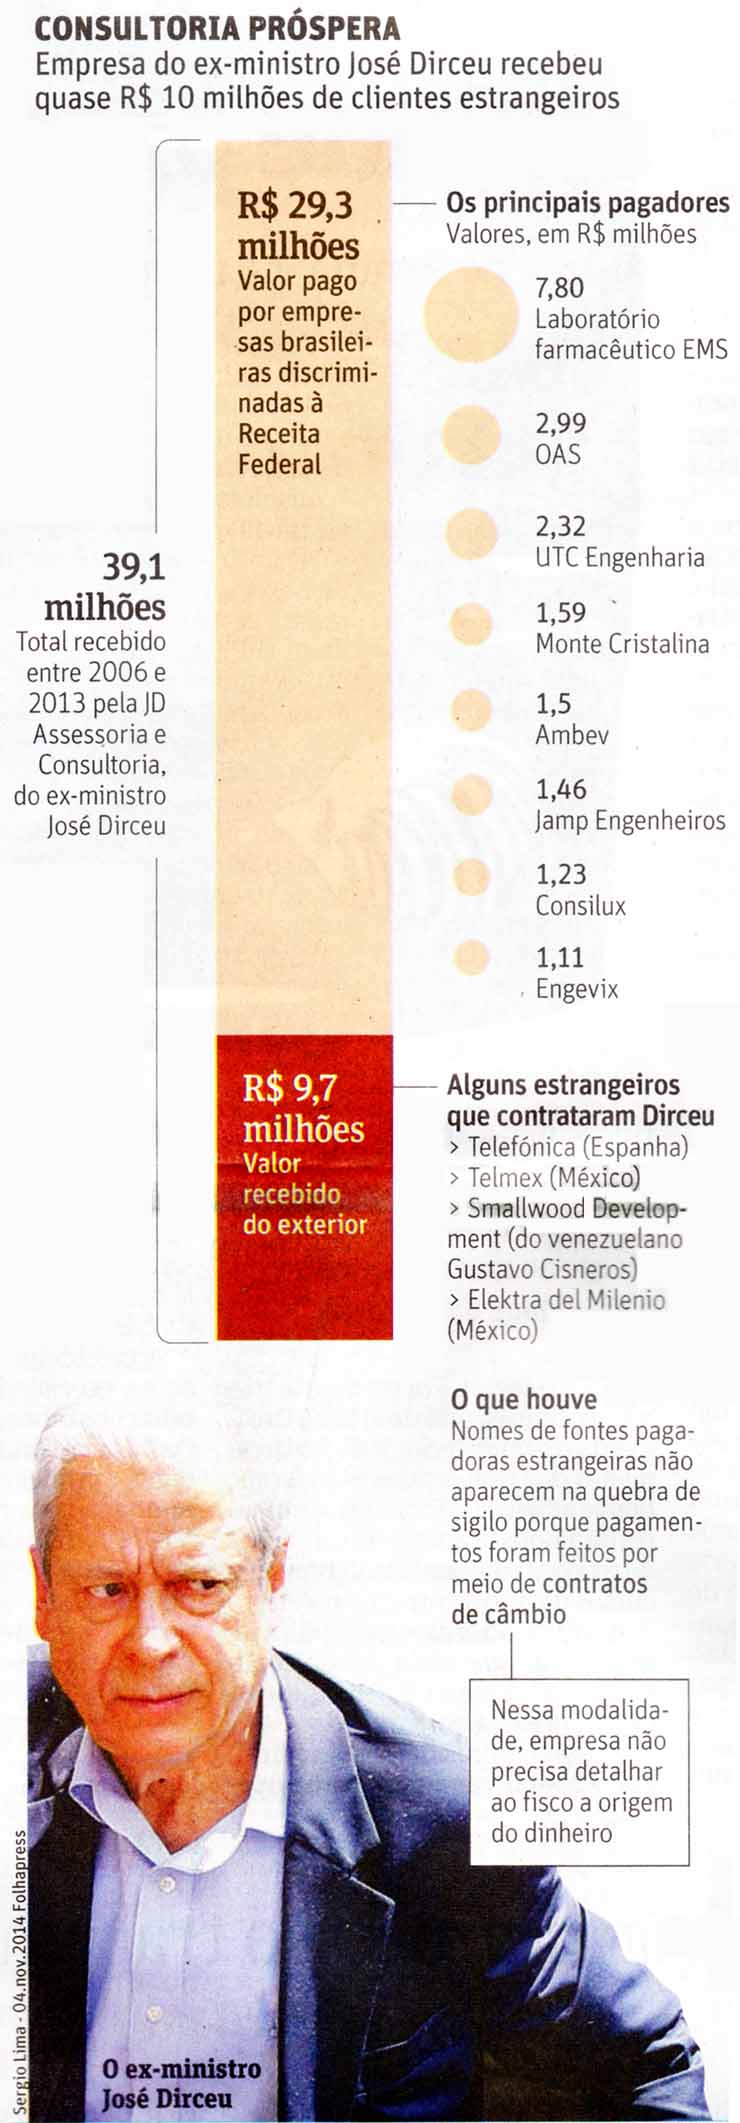 Folha de So Paulo - 03/04/15 - Jos Dirceu: Consultoria Prspera - Foto: Srgio Lima-04.nov.2014/Folhapress